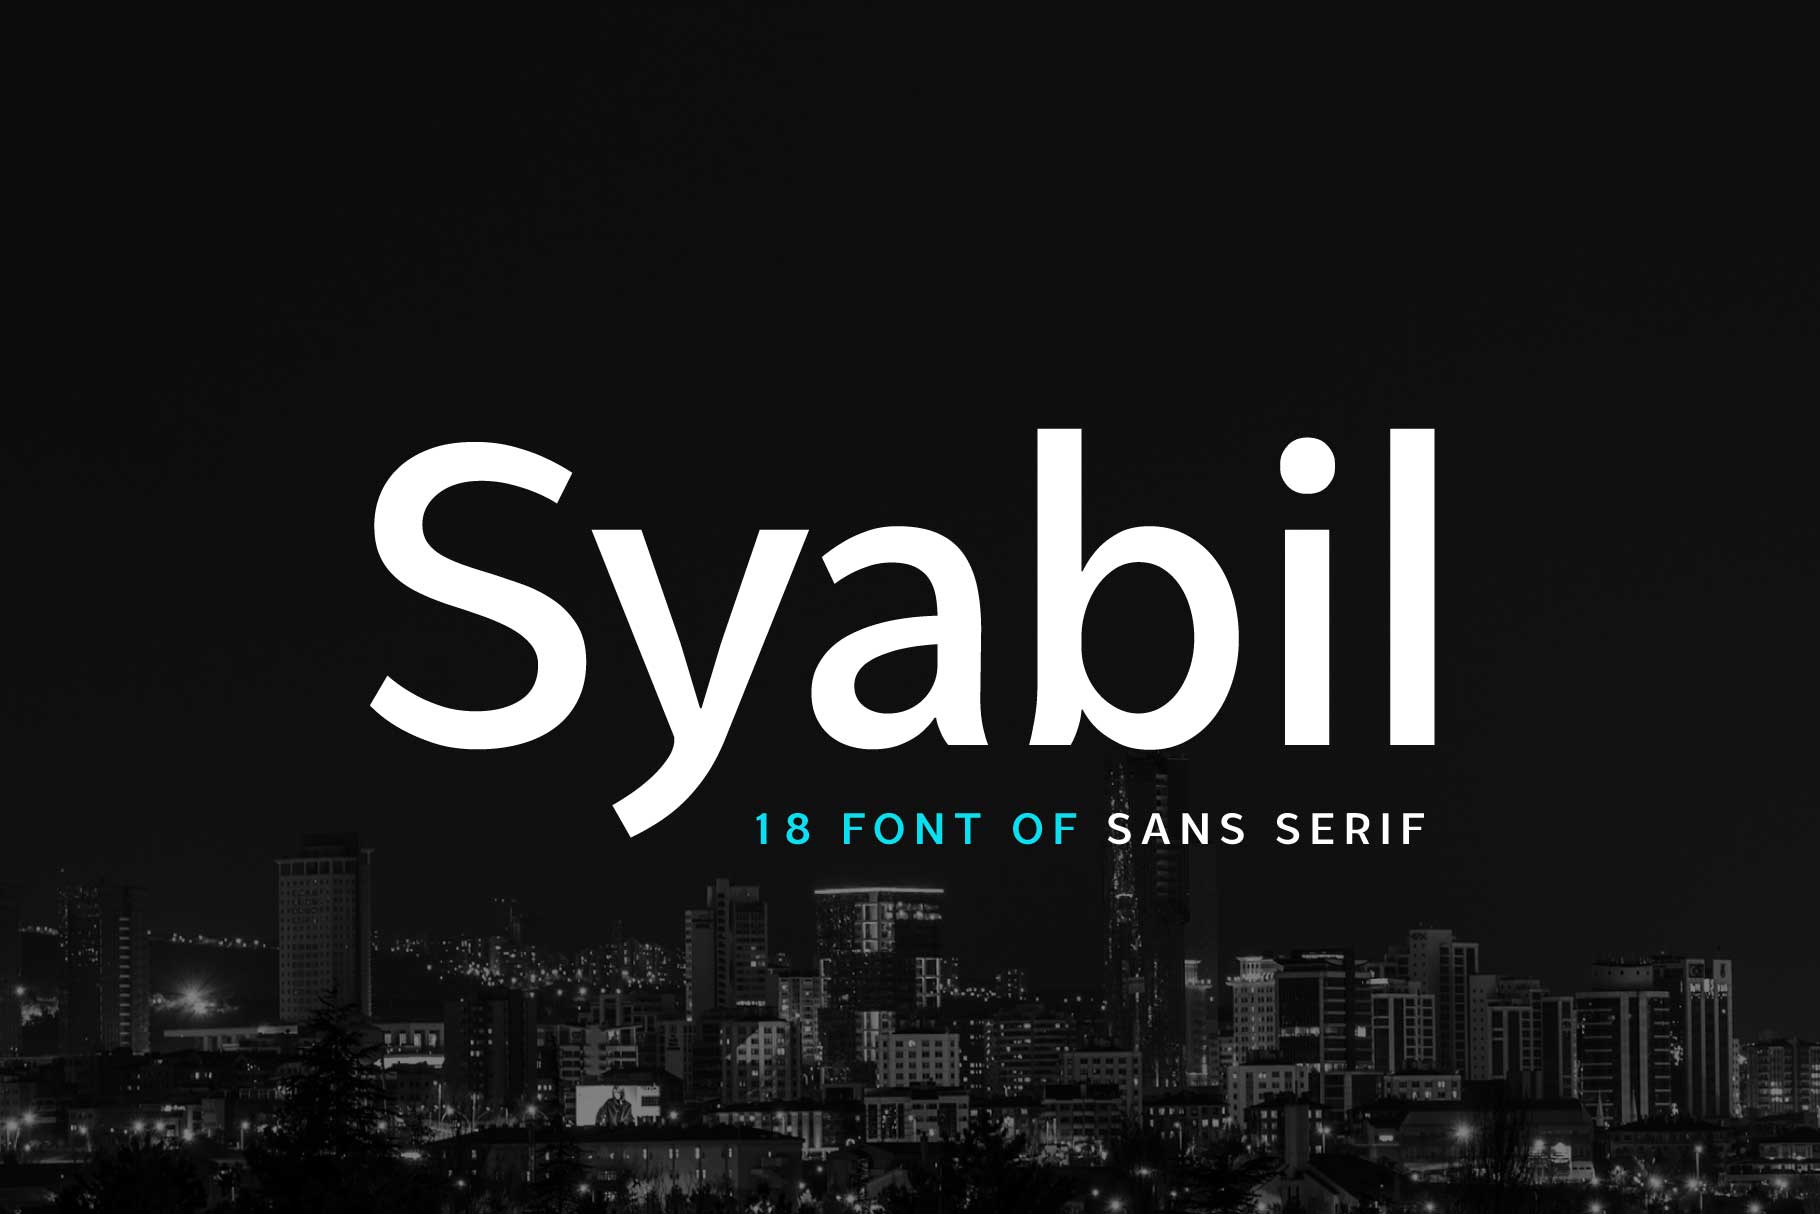 New_Font_Images_2021 - Syabil-1